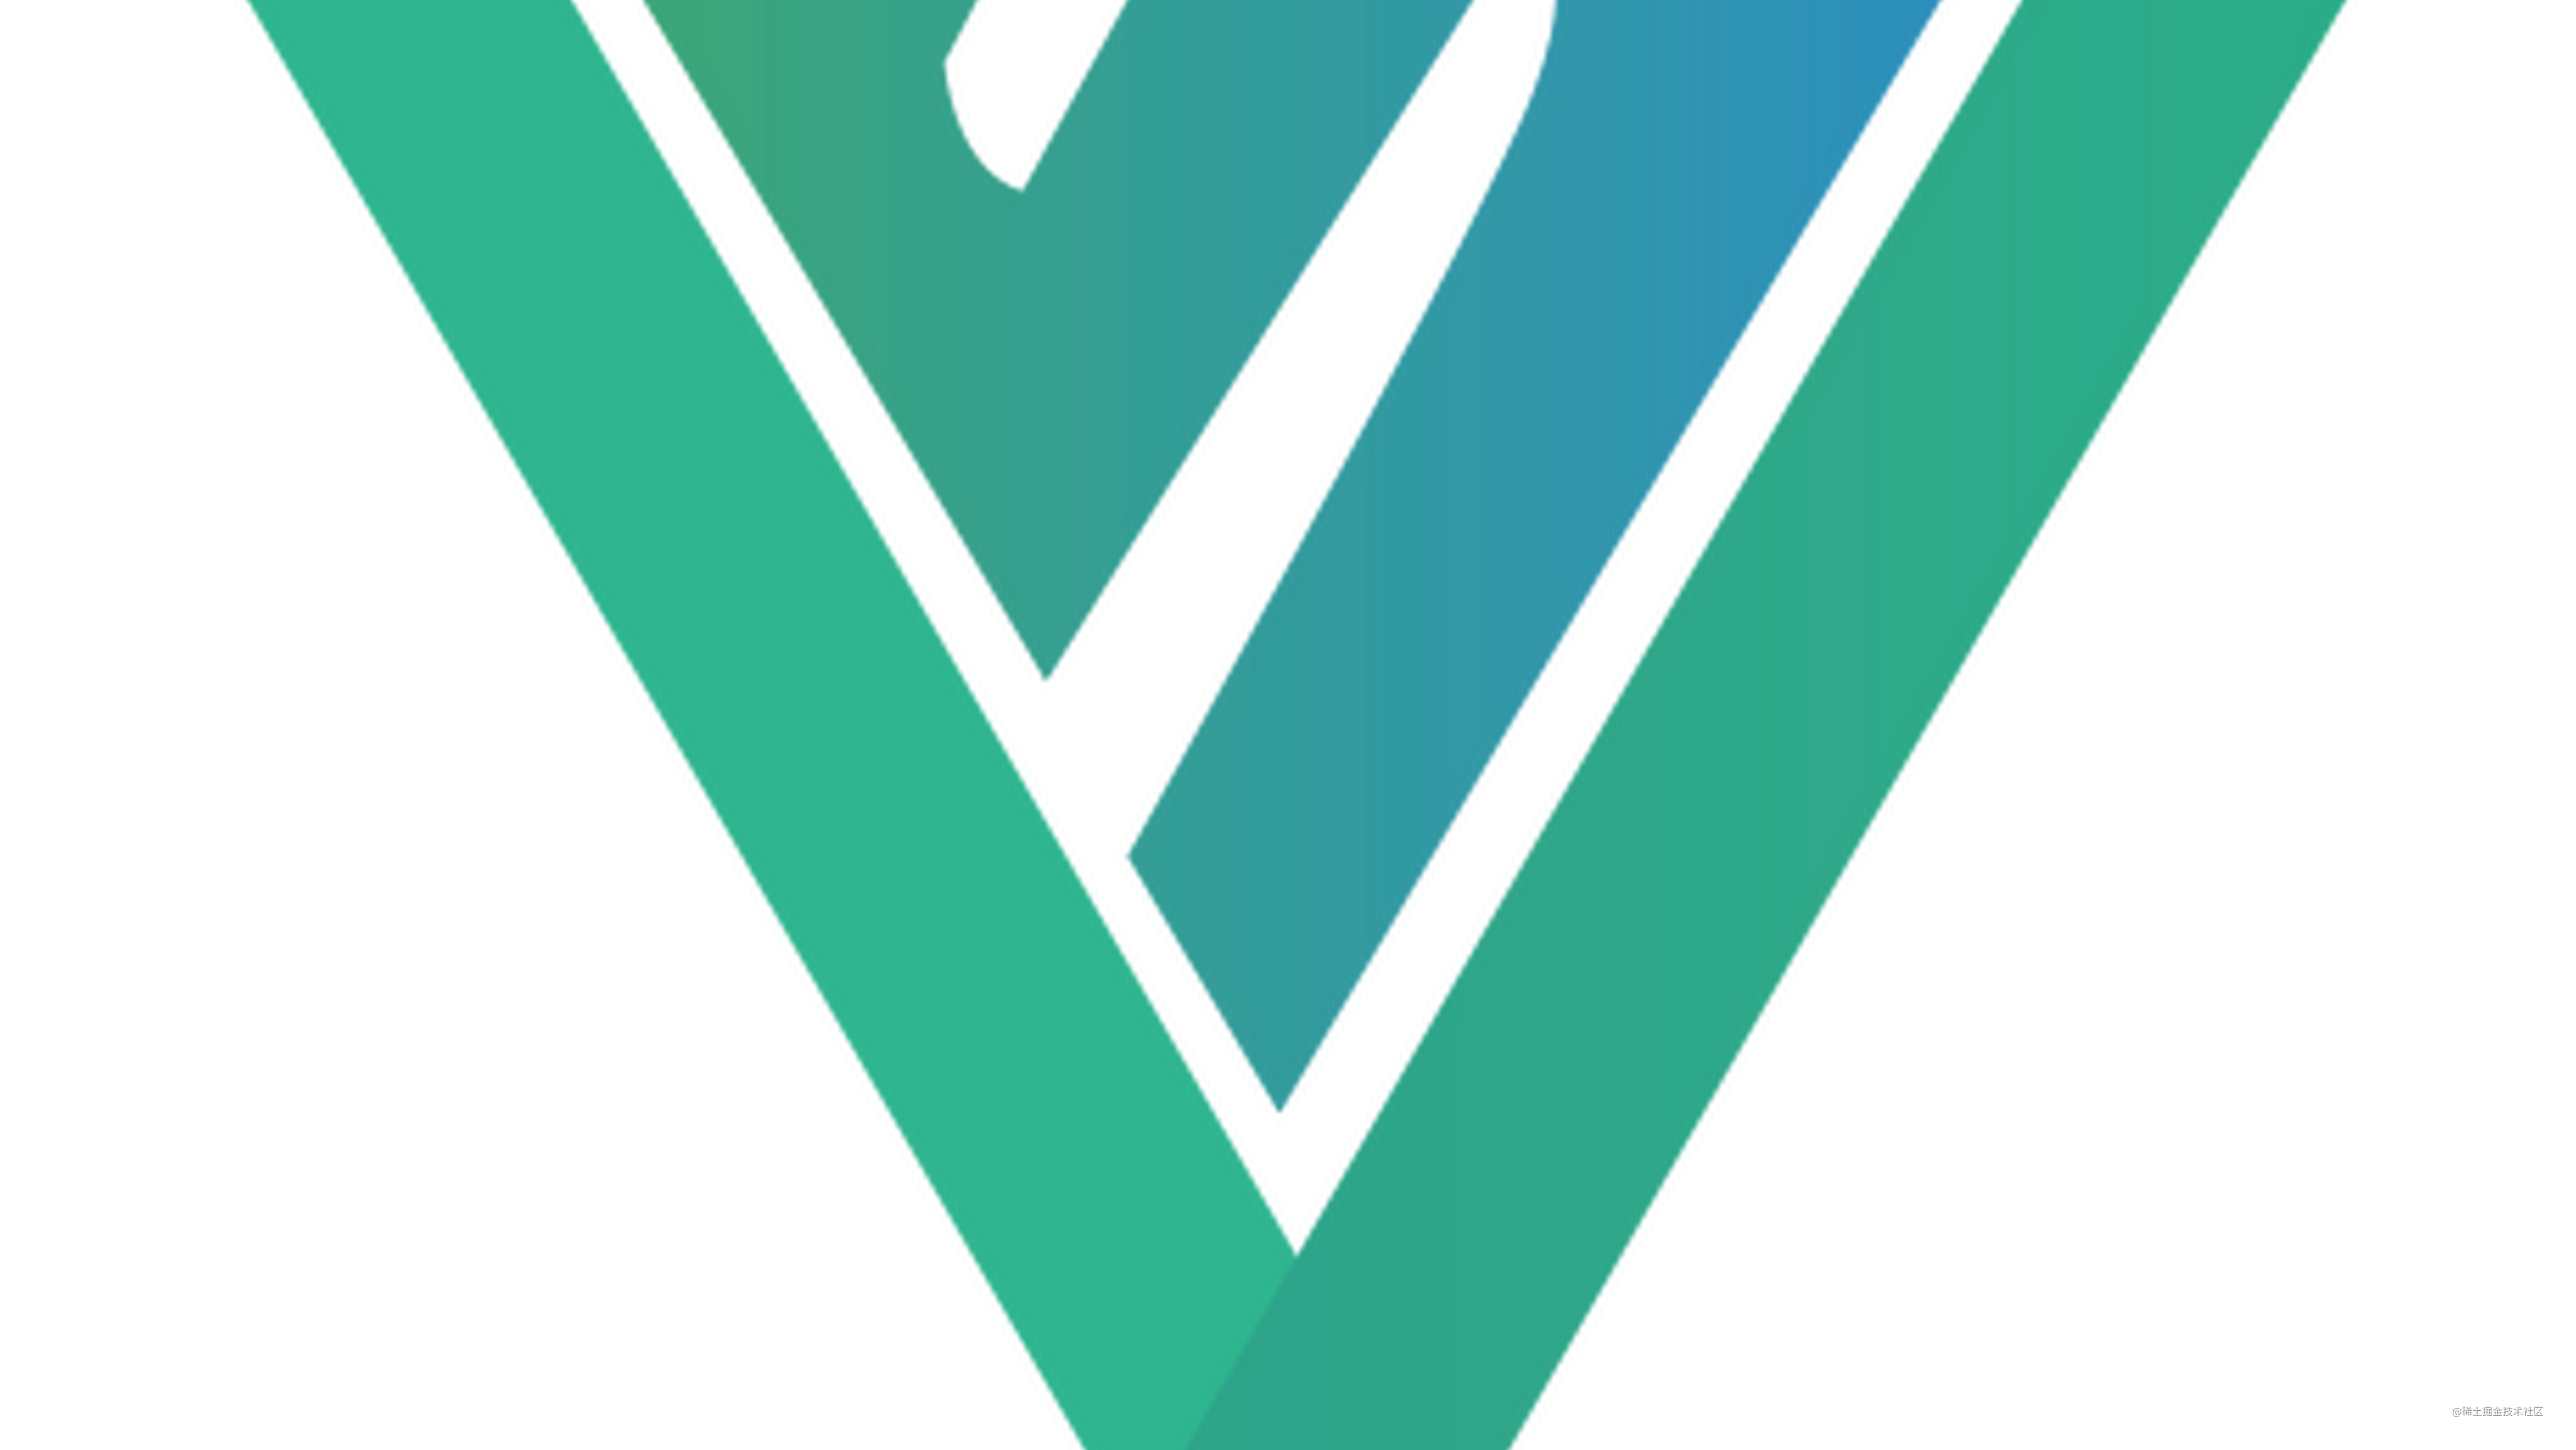 mpvue - 美团点评开源的基于 Vue 的微信小程序前端框架